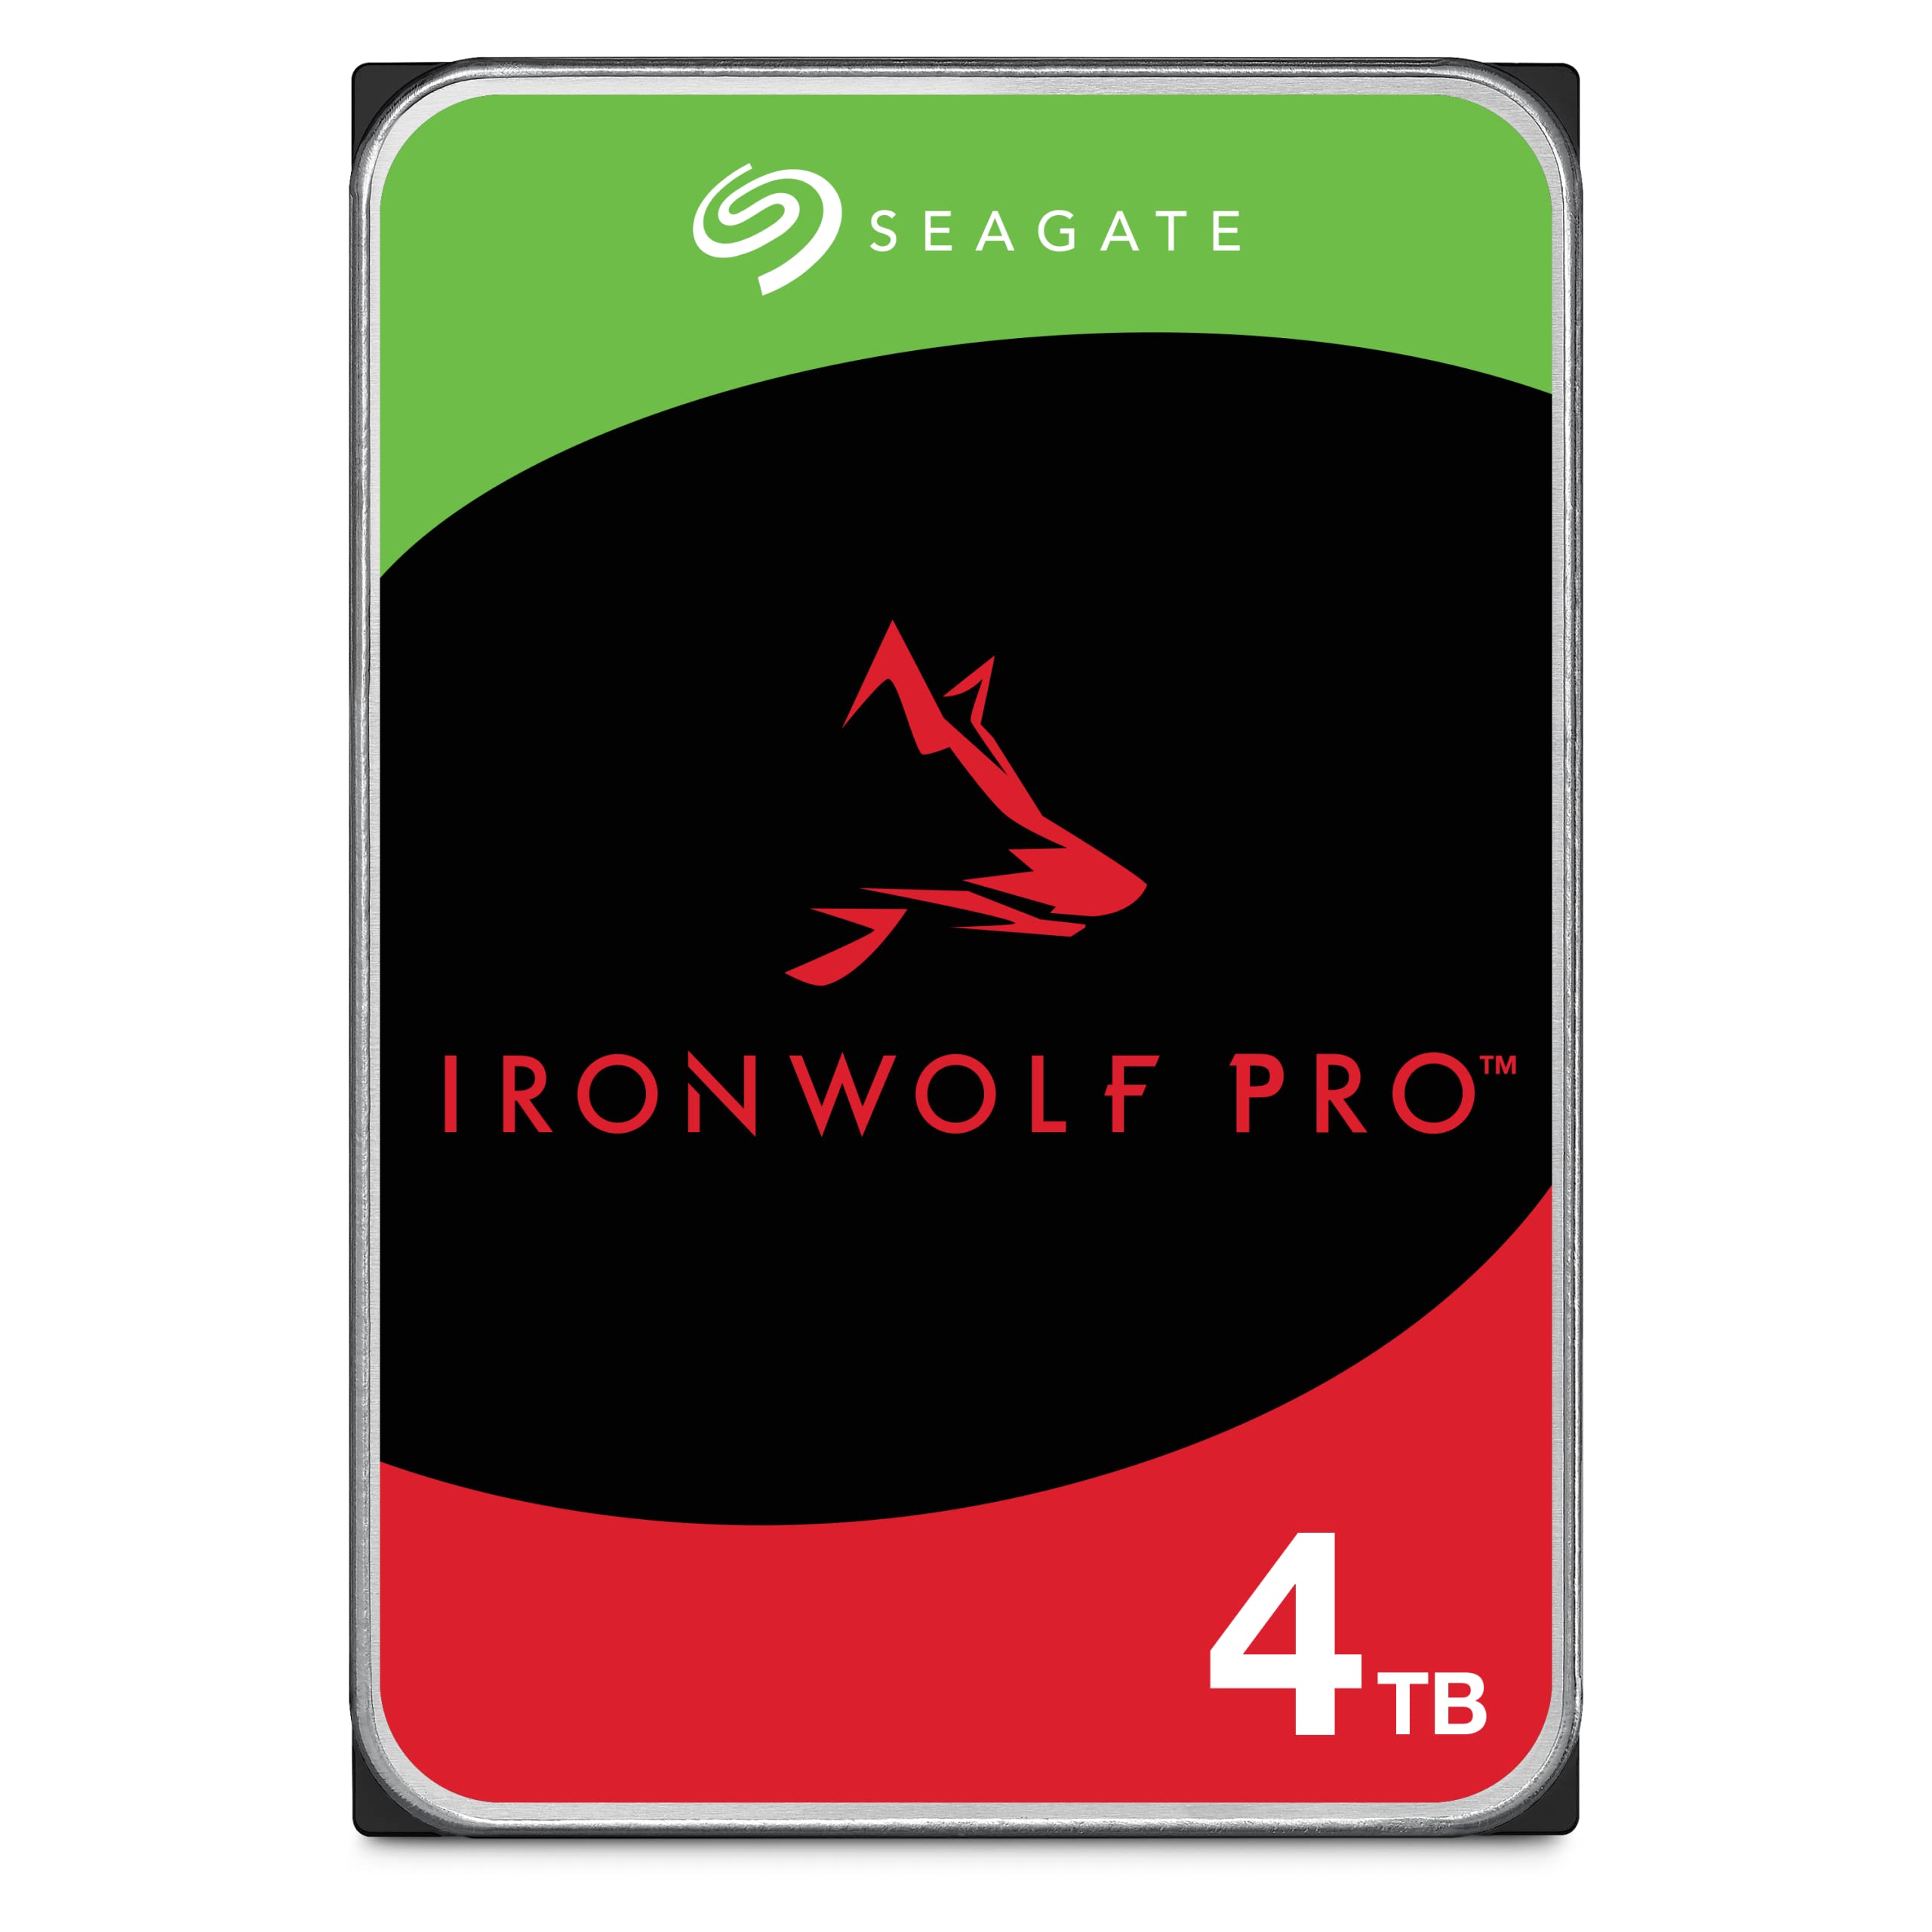 Seagate IronWolf Pro 4TB Enterprise NAS Internal HDD Hard Drive – CMR 3.5 Inch SATA 6Gb/s 7200 RPM 256MB Cache for RAID Network Attached Storage, Rescue Services - FFP (ST4000NTZ01)